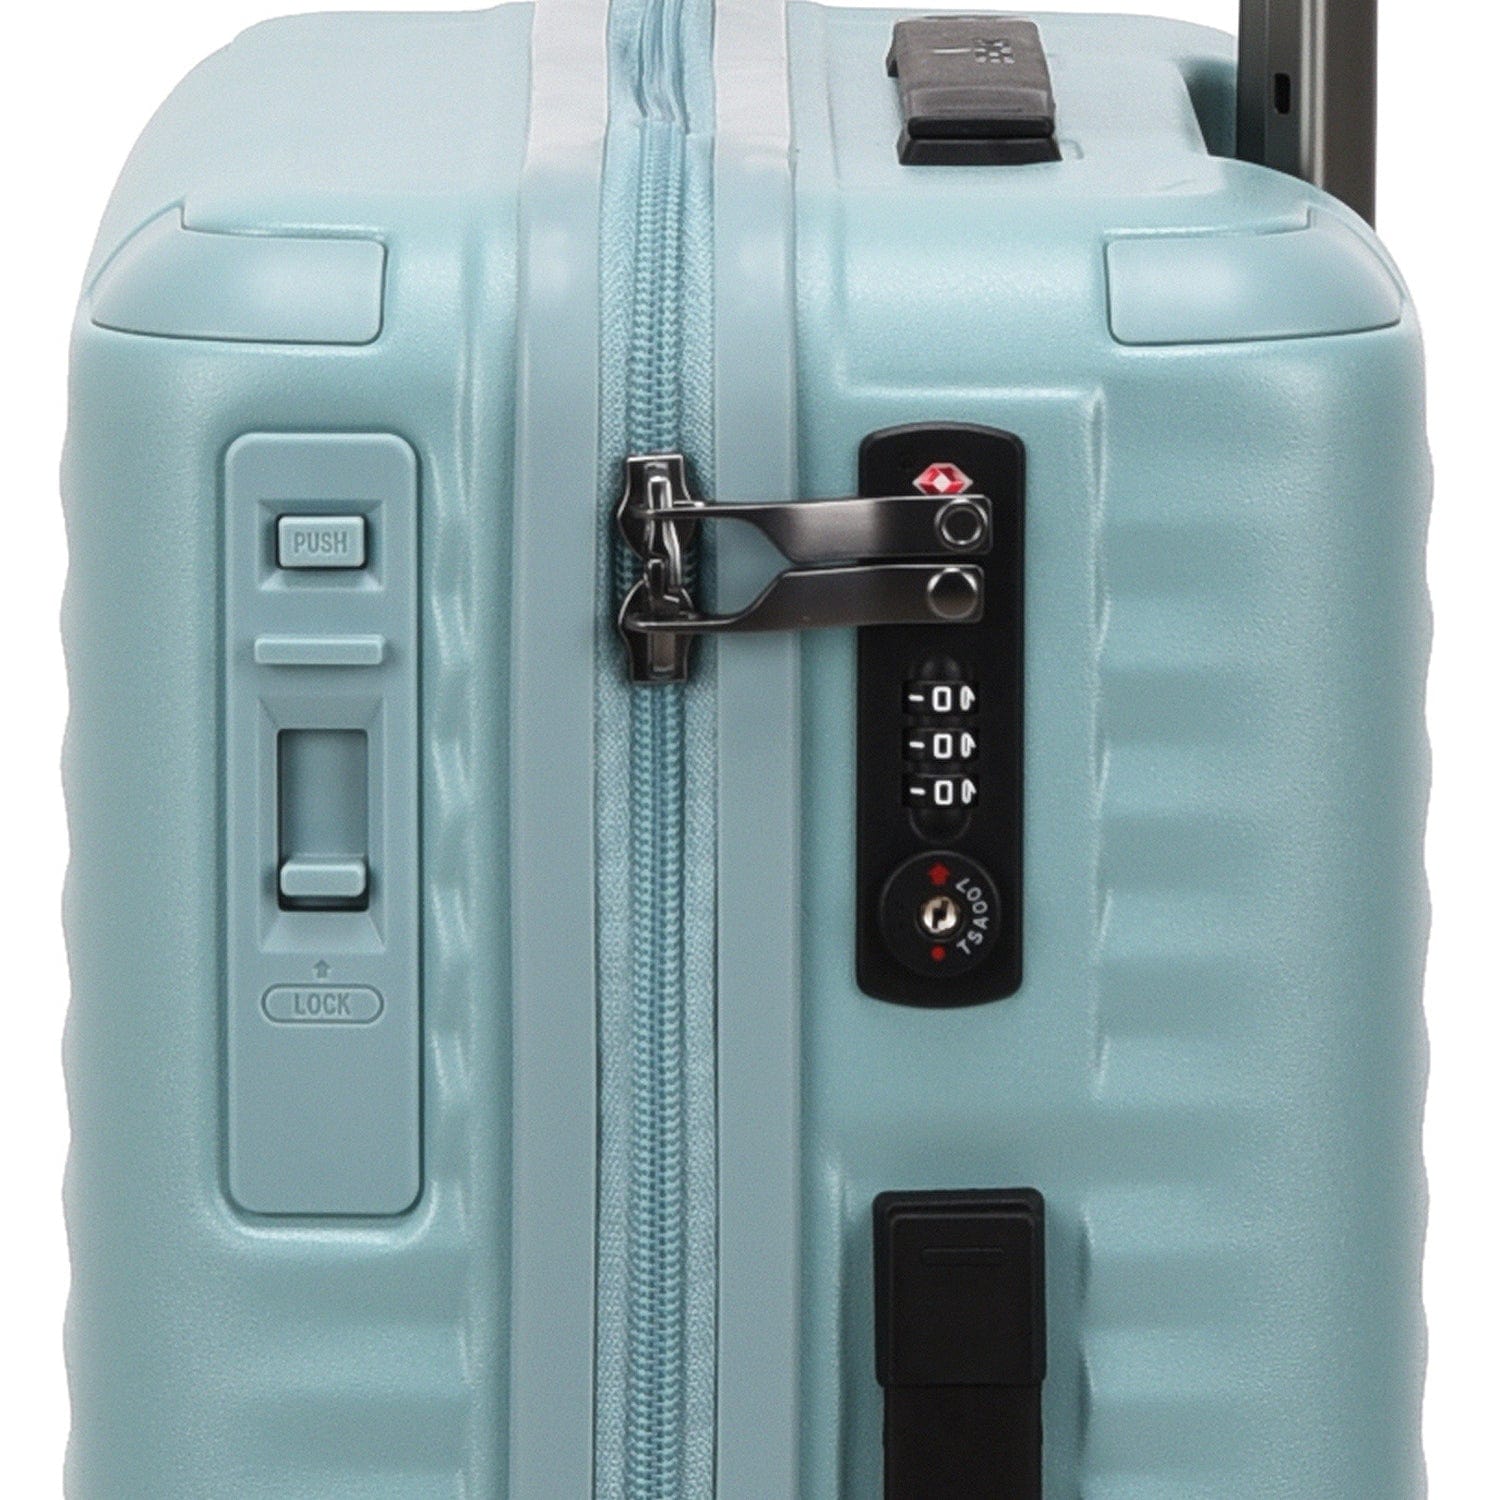 Echolac Celestra 55cm Hardcase Non-Expandable 4 Double Wheel Cabin Luggage Trolley Slate Blue - PC183XA SLATE BLUE 20